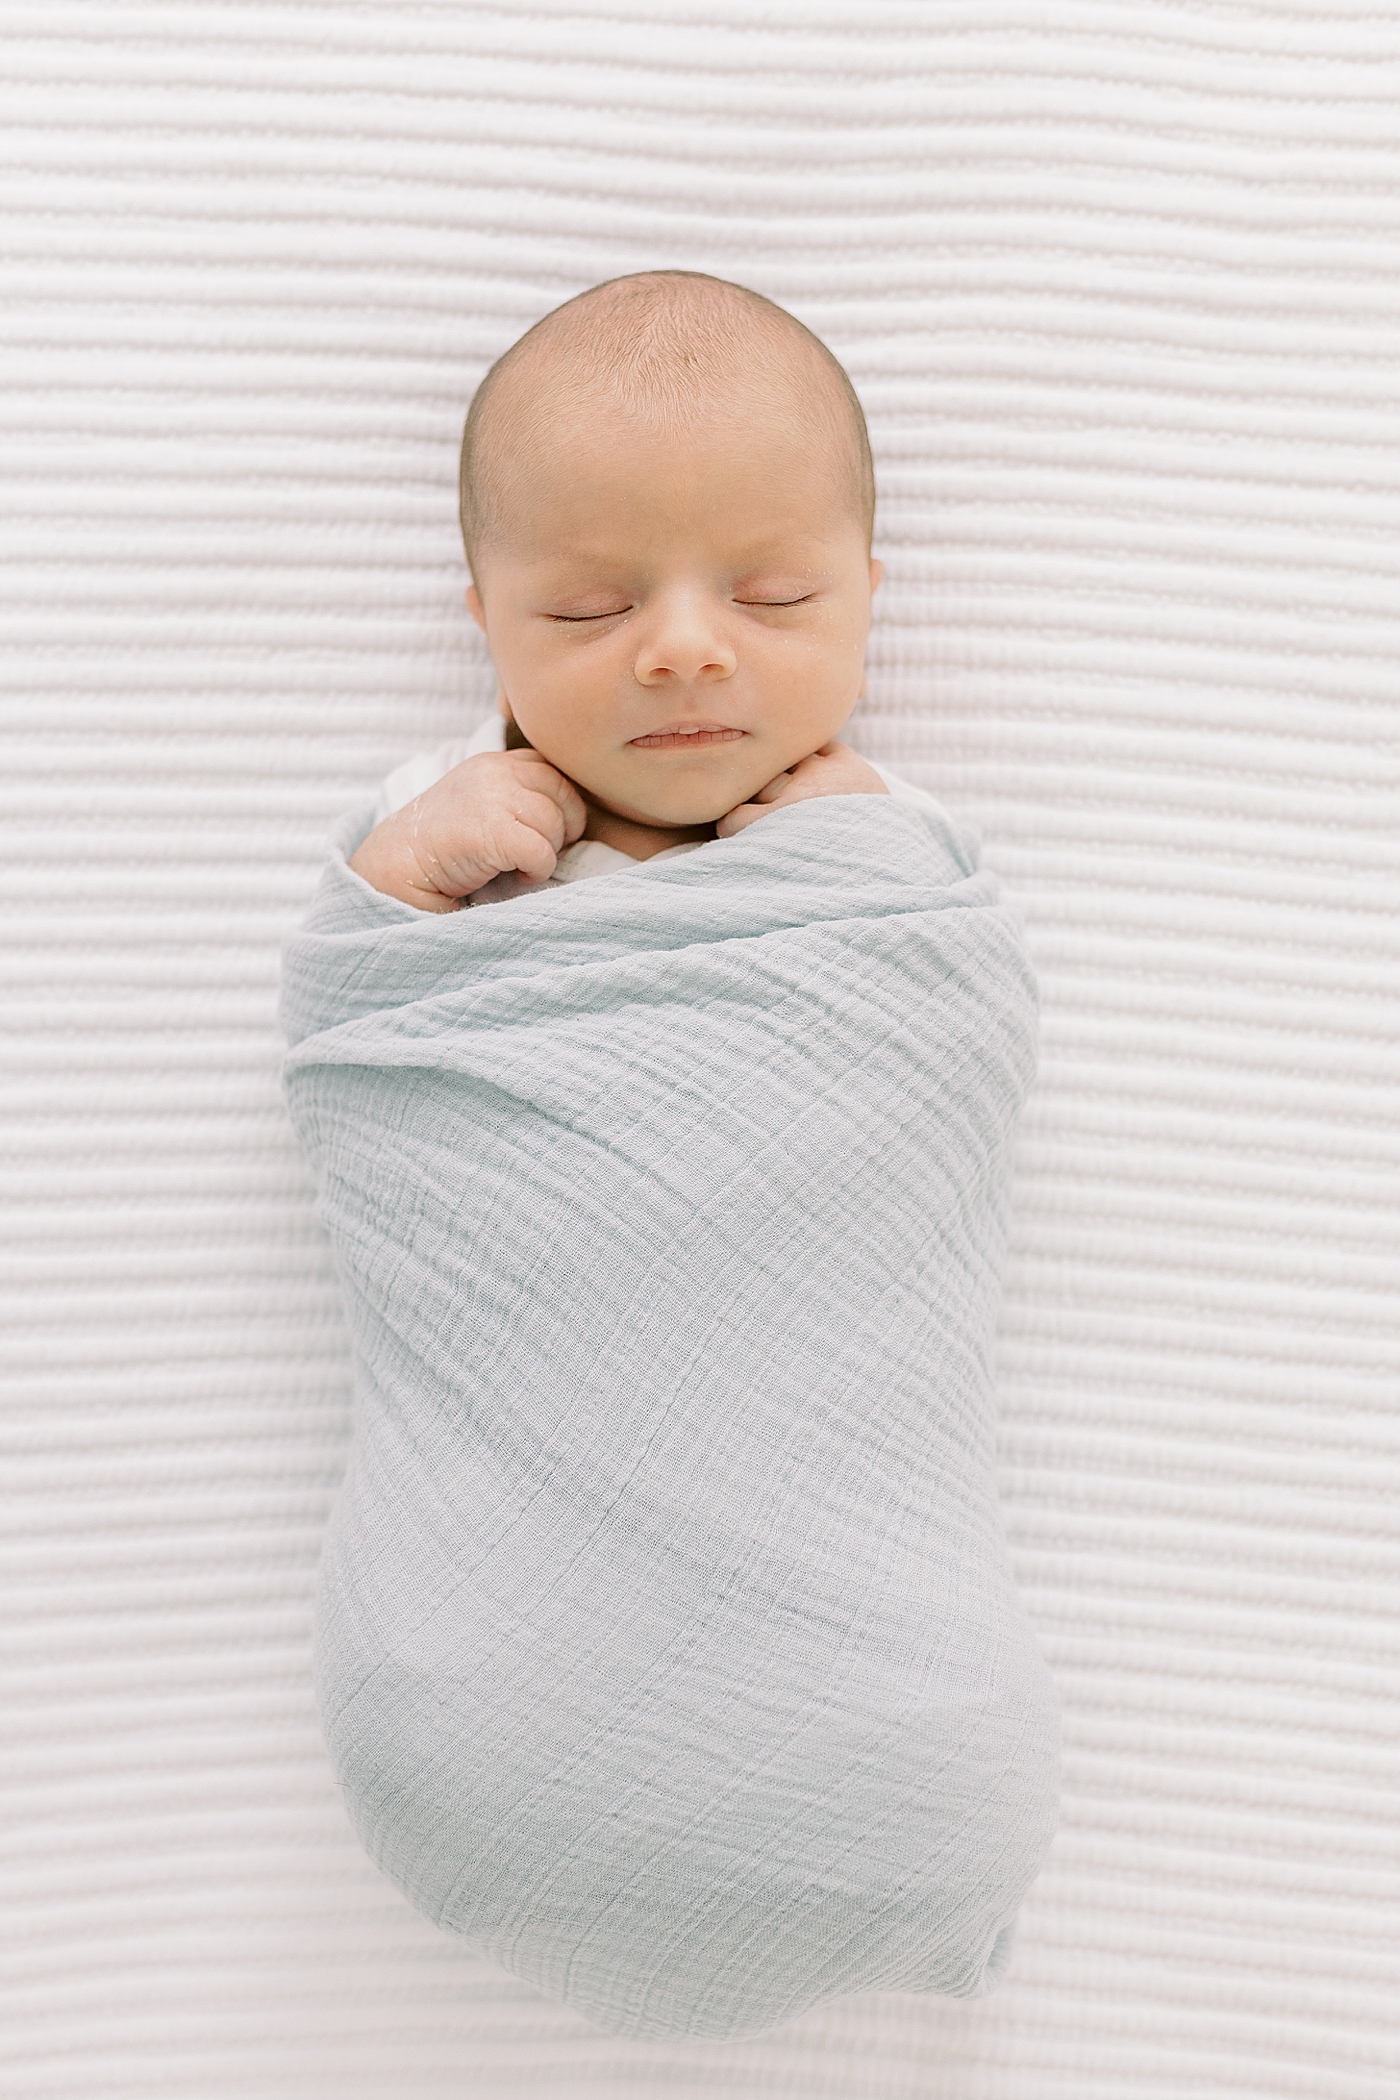 Sleeping newborn baby boy wrapped in a blue swaddle | Image by Caitlyn Motycka